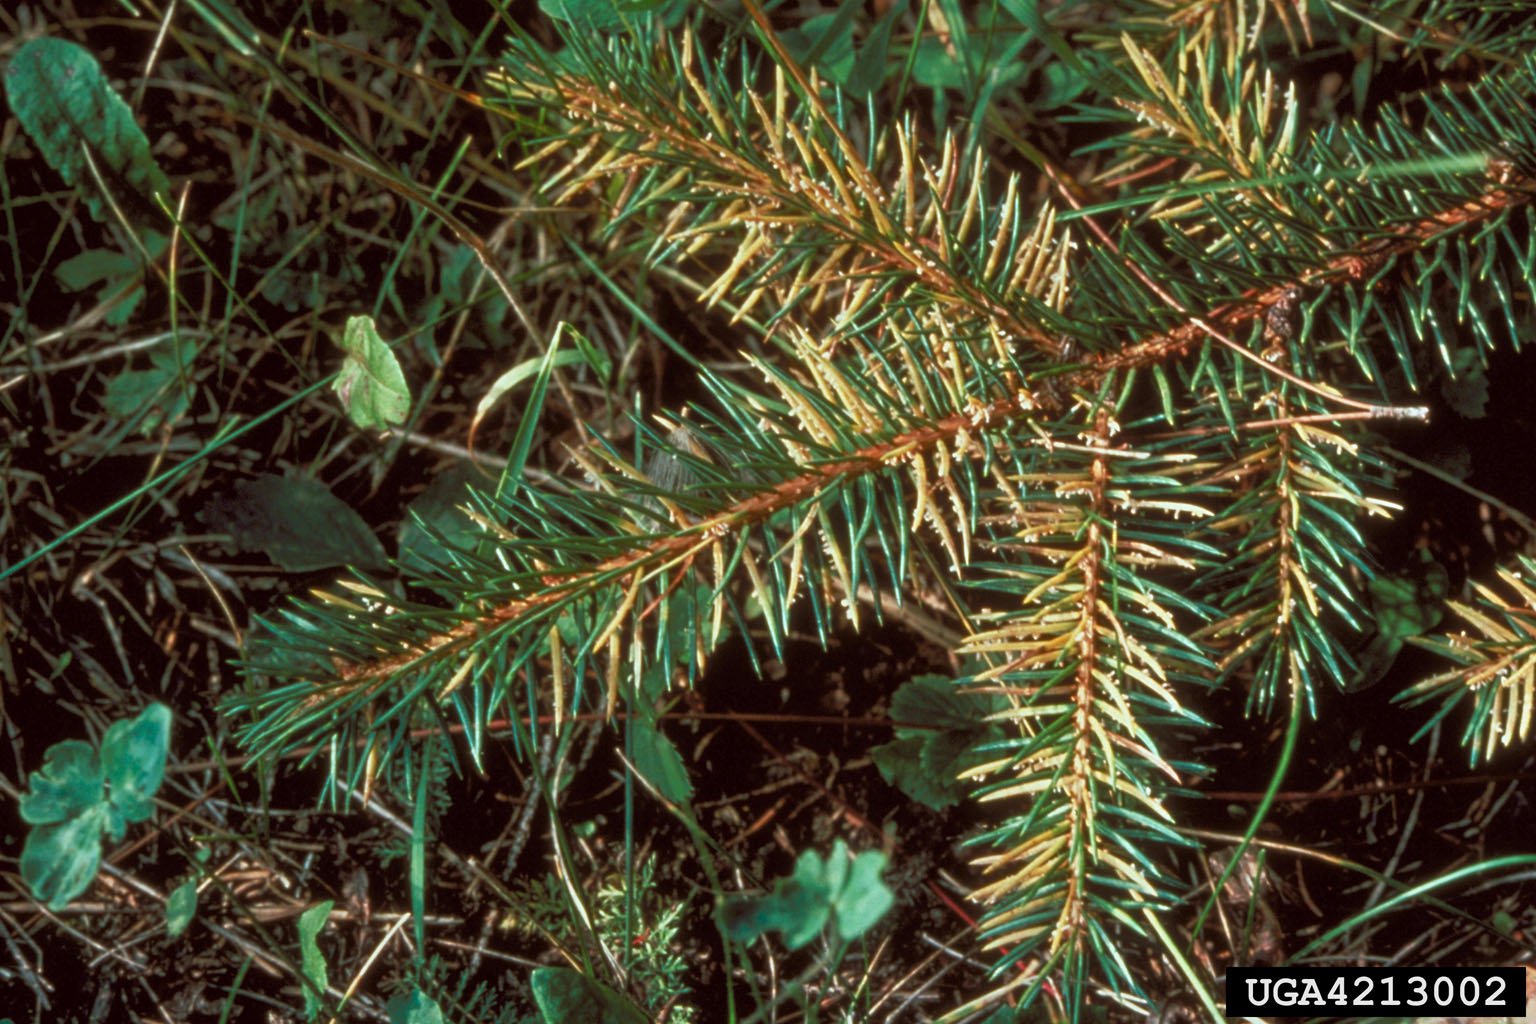 1547735983 recognizing spruce needle rust symptoms takeseeds com - Acknowledging Spruce Needle Rust Symptoms|TakeSeeds.com